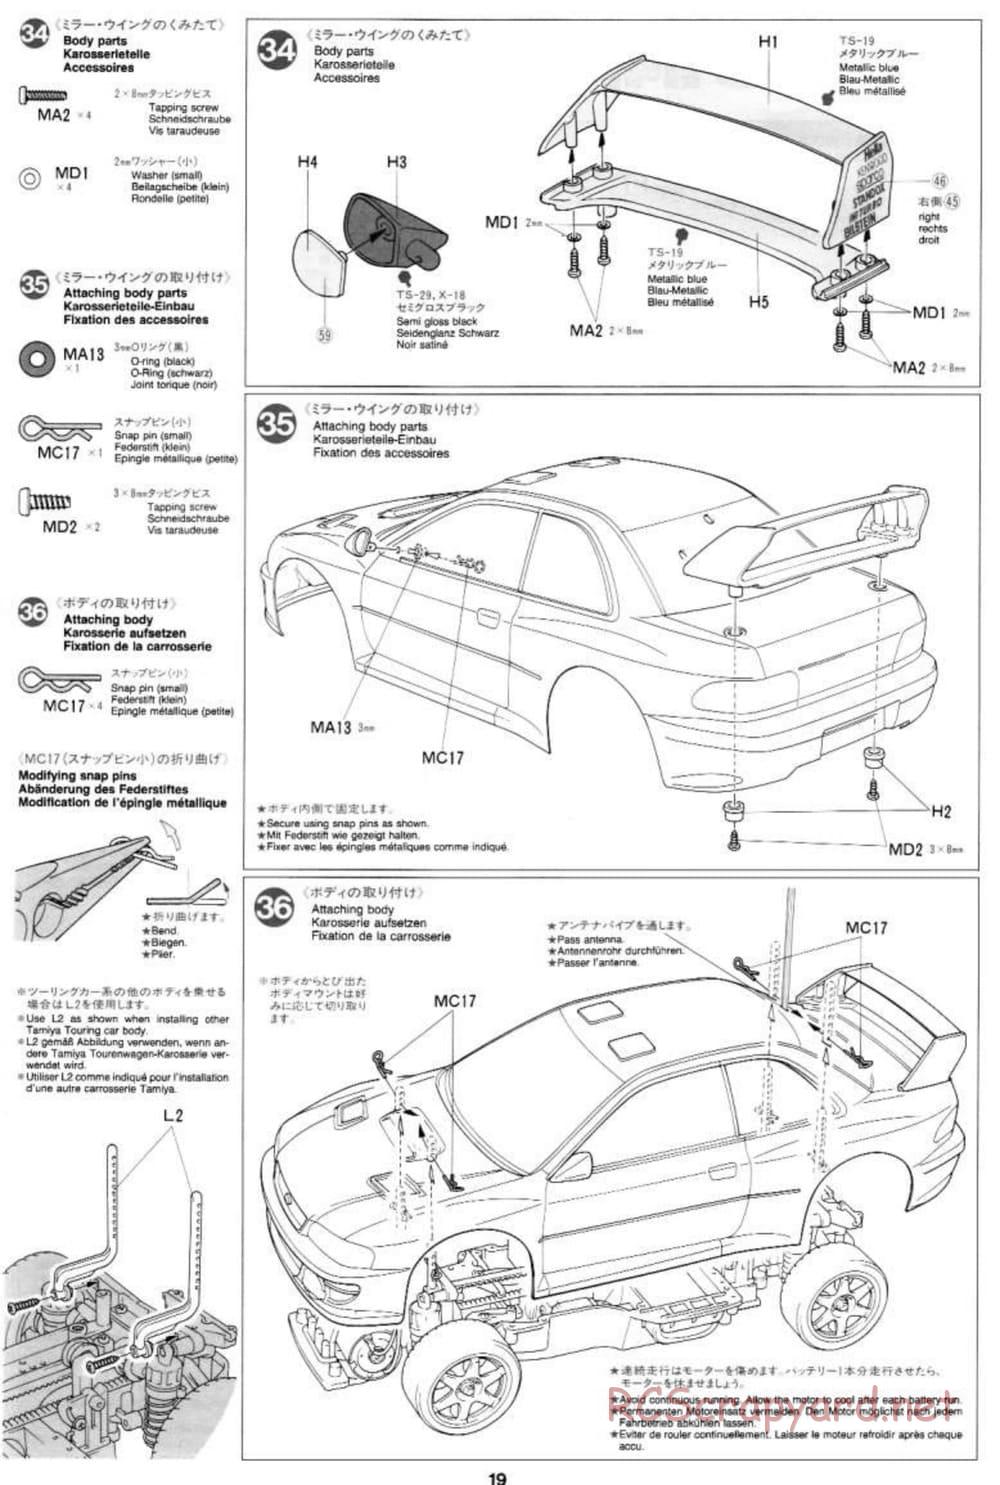 Tamiya - Subaru Impreza WRC 97 - TA-03F Chassis - Manual - Page 19